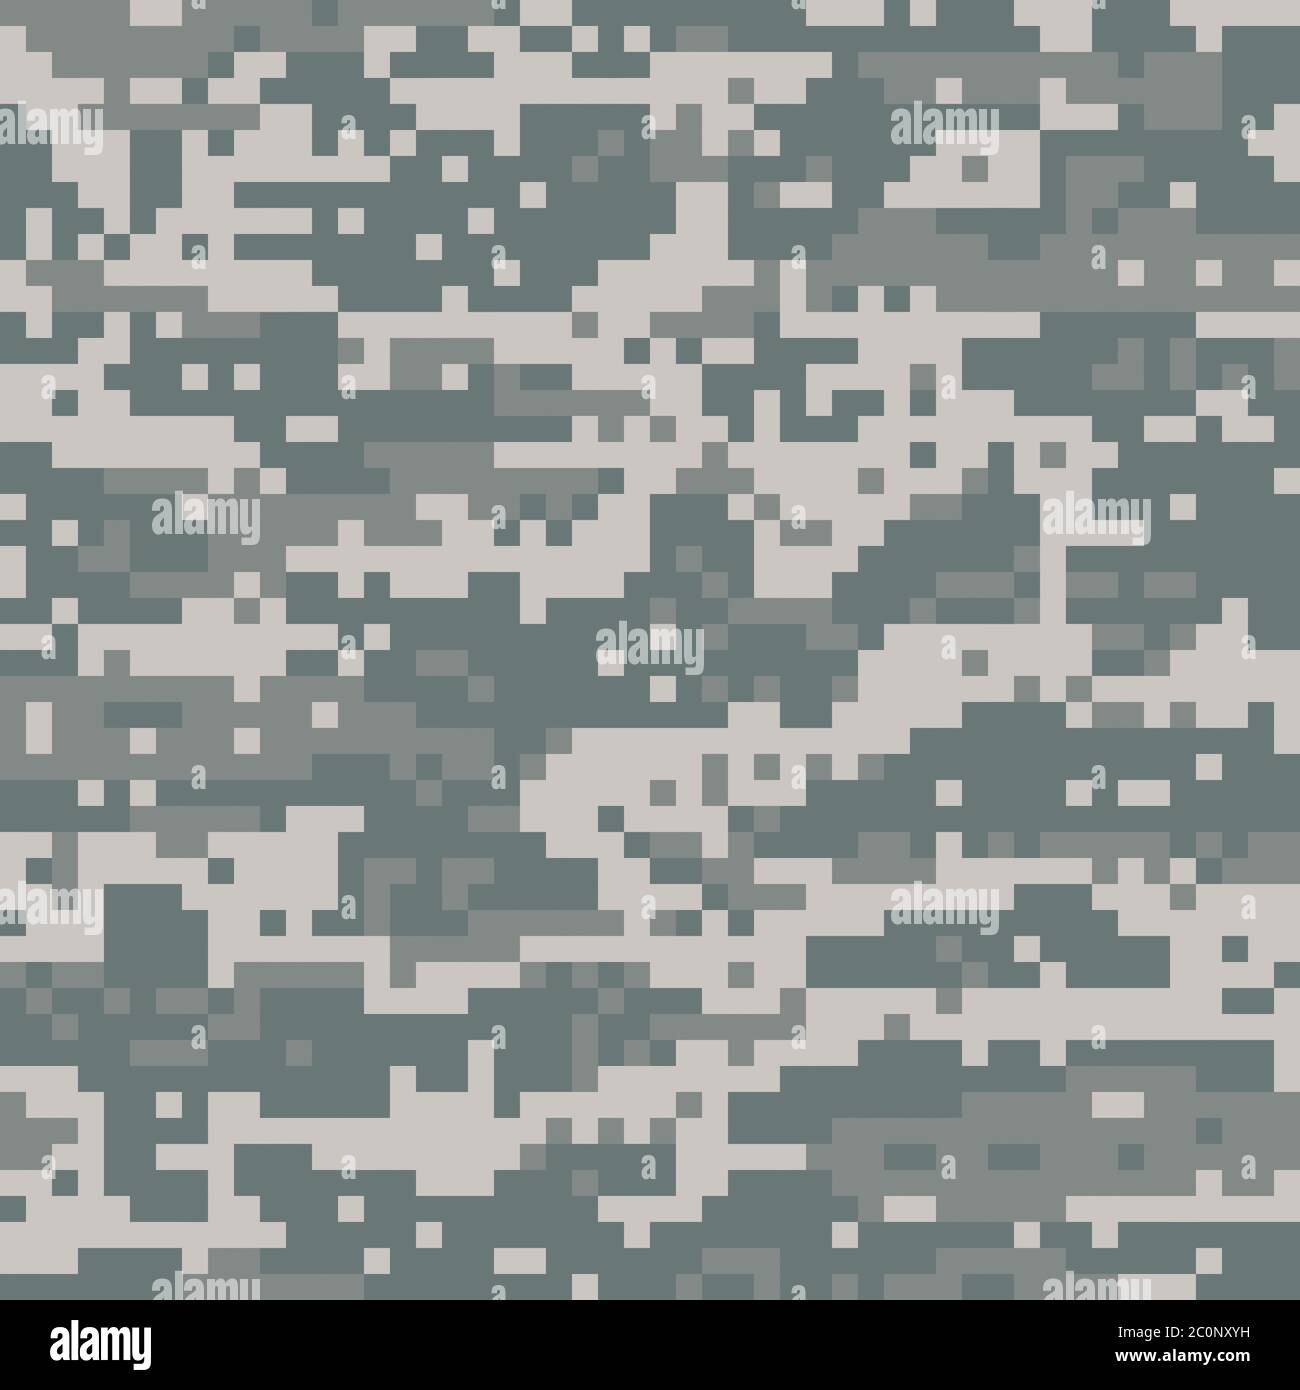 American Military Digital Desert camouflage Pattern Stock Photo